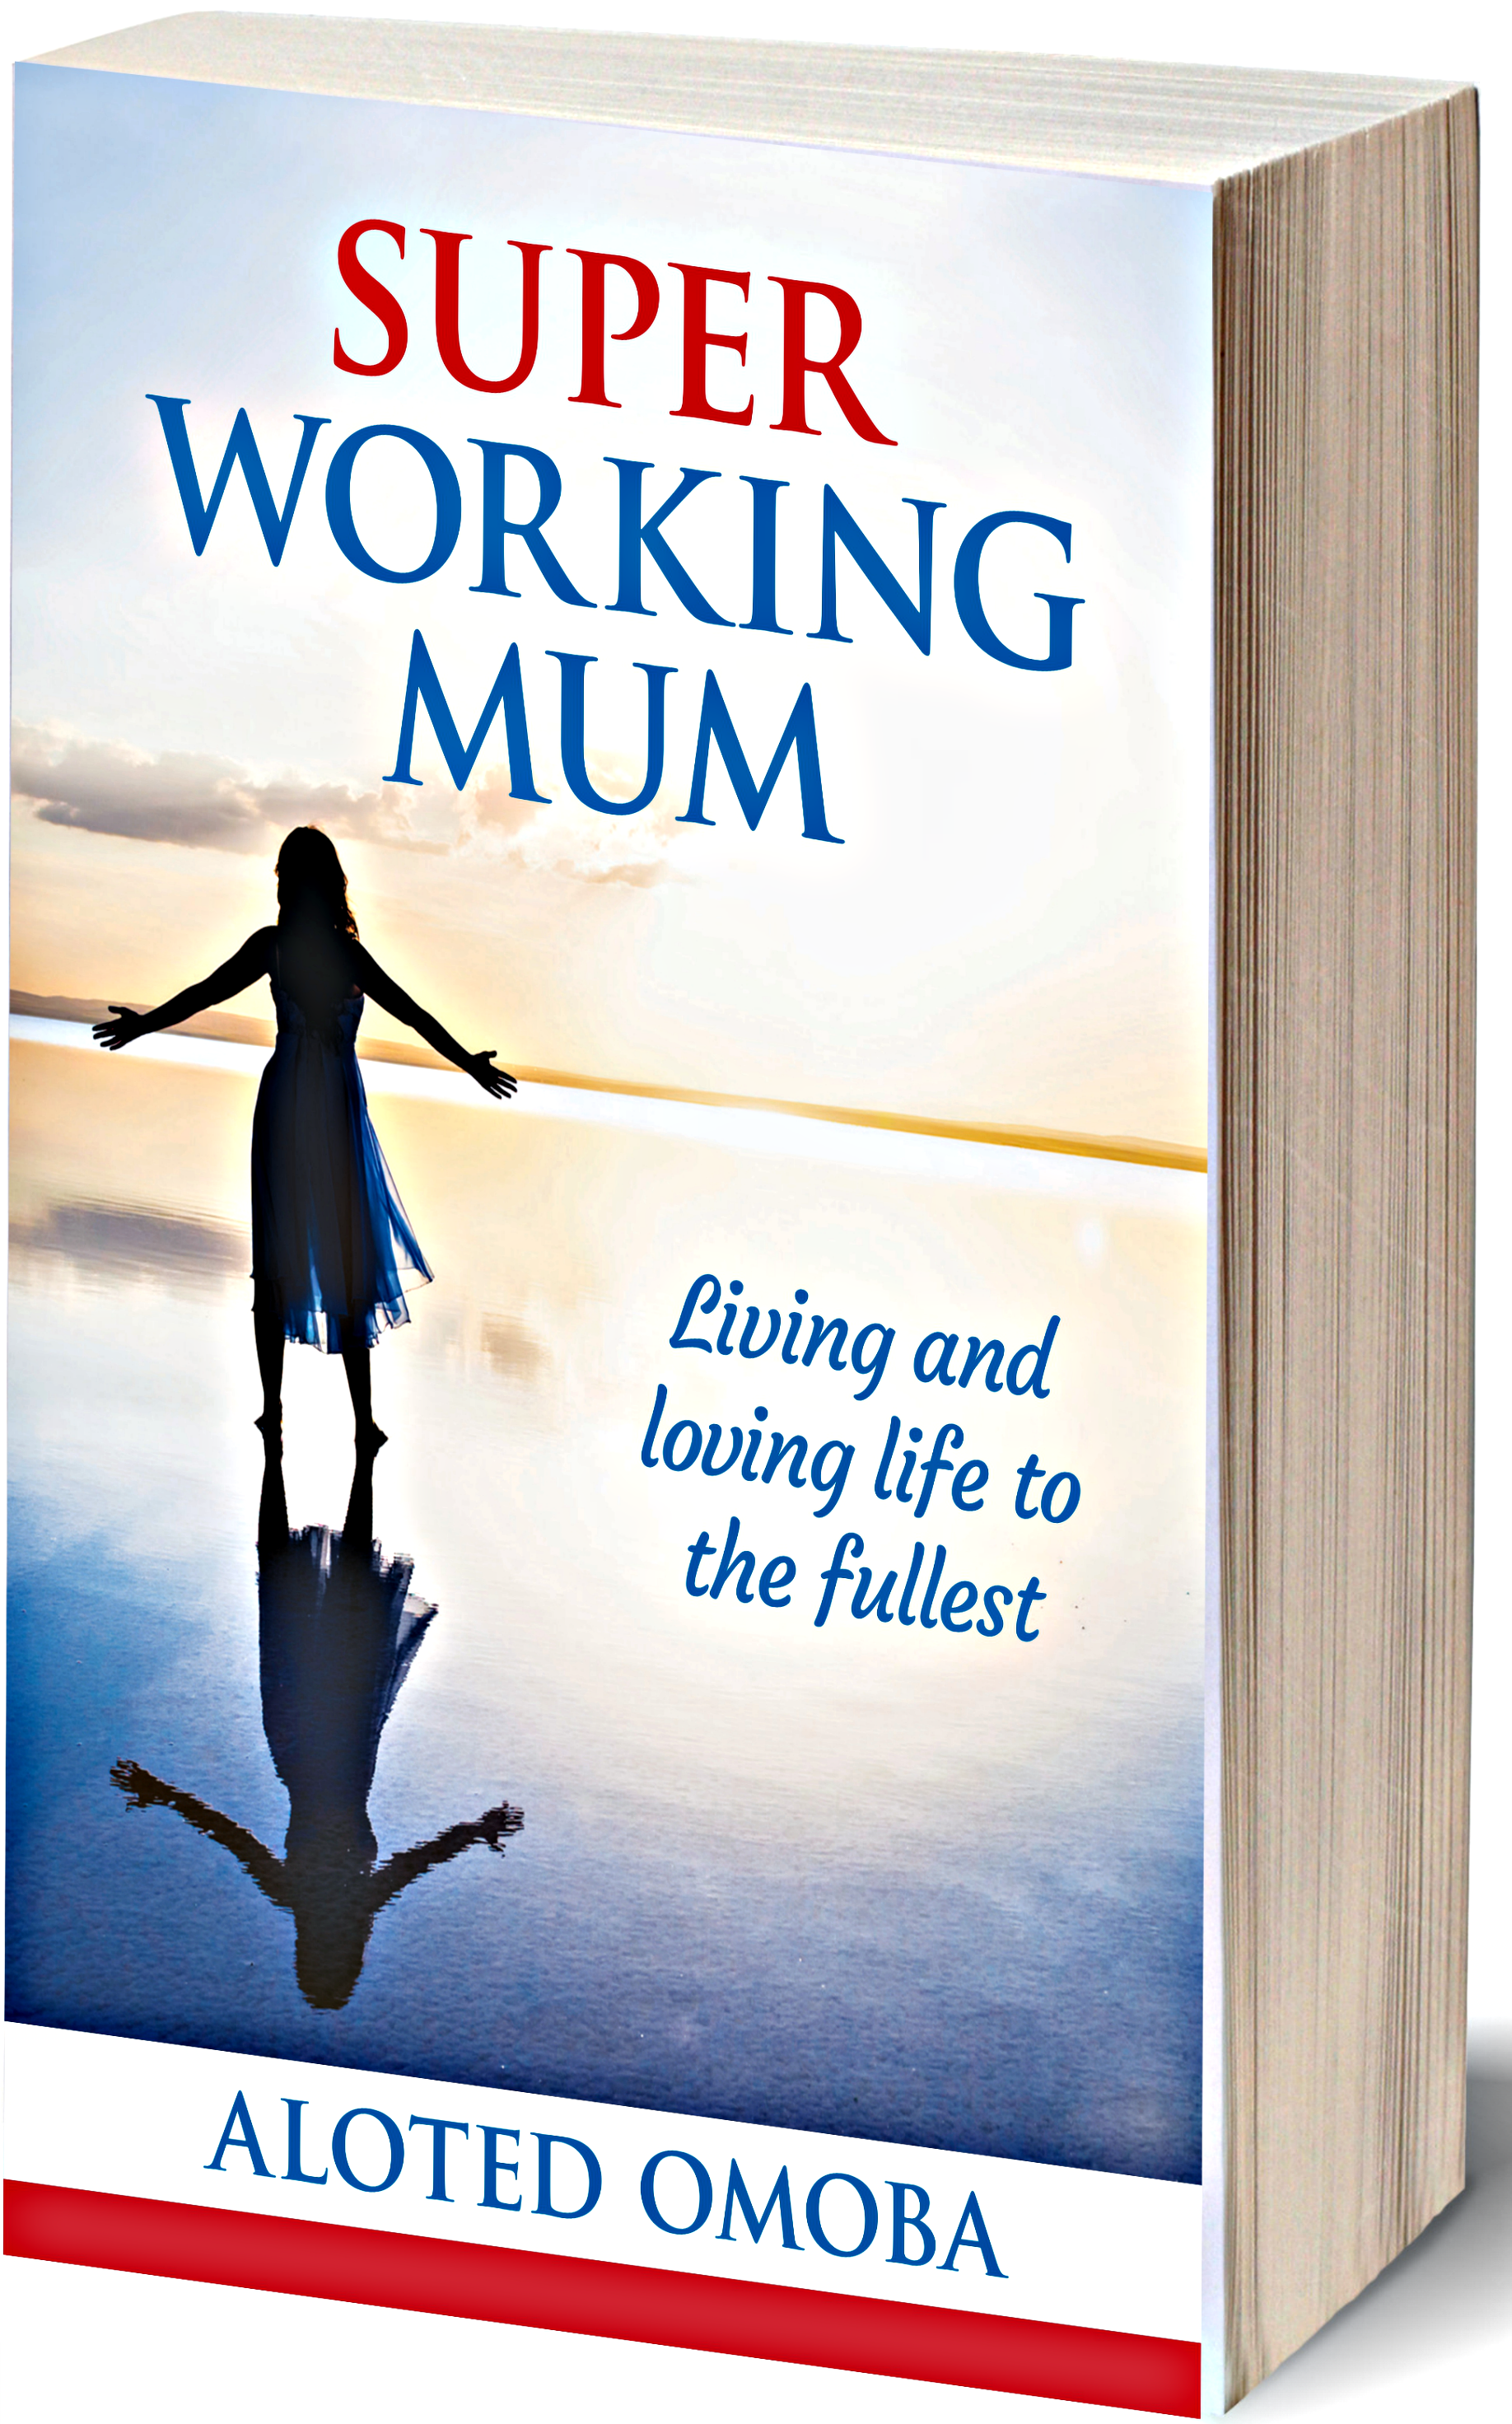 Order the Super Working Mum Book